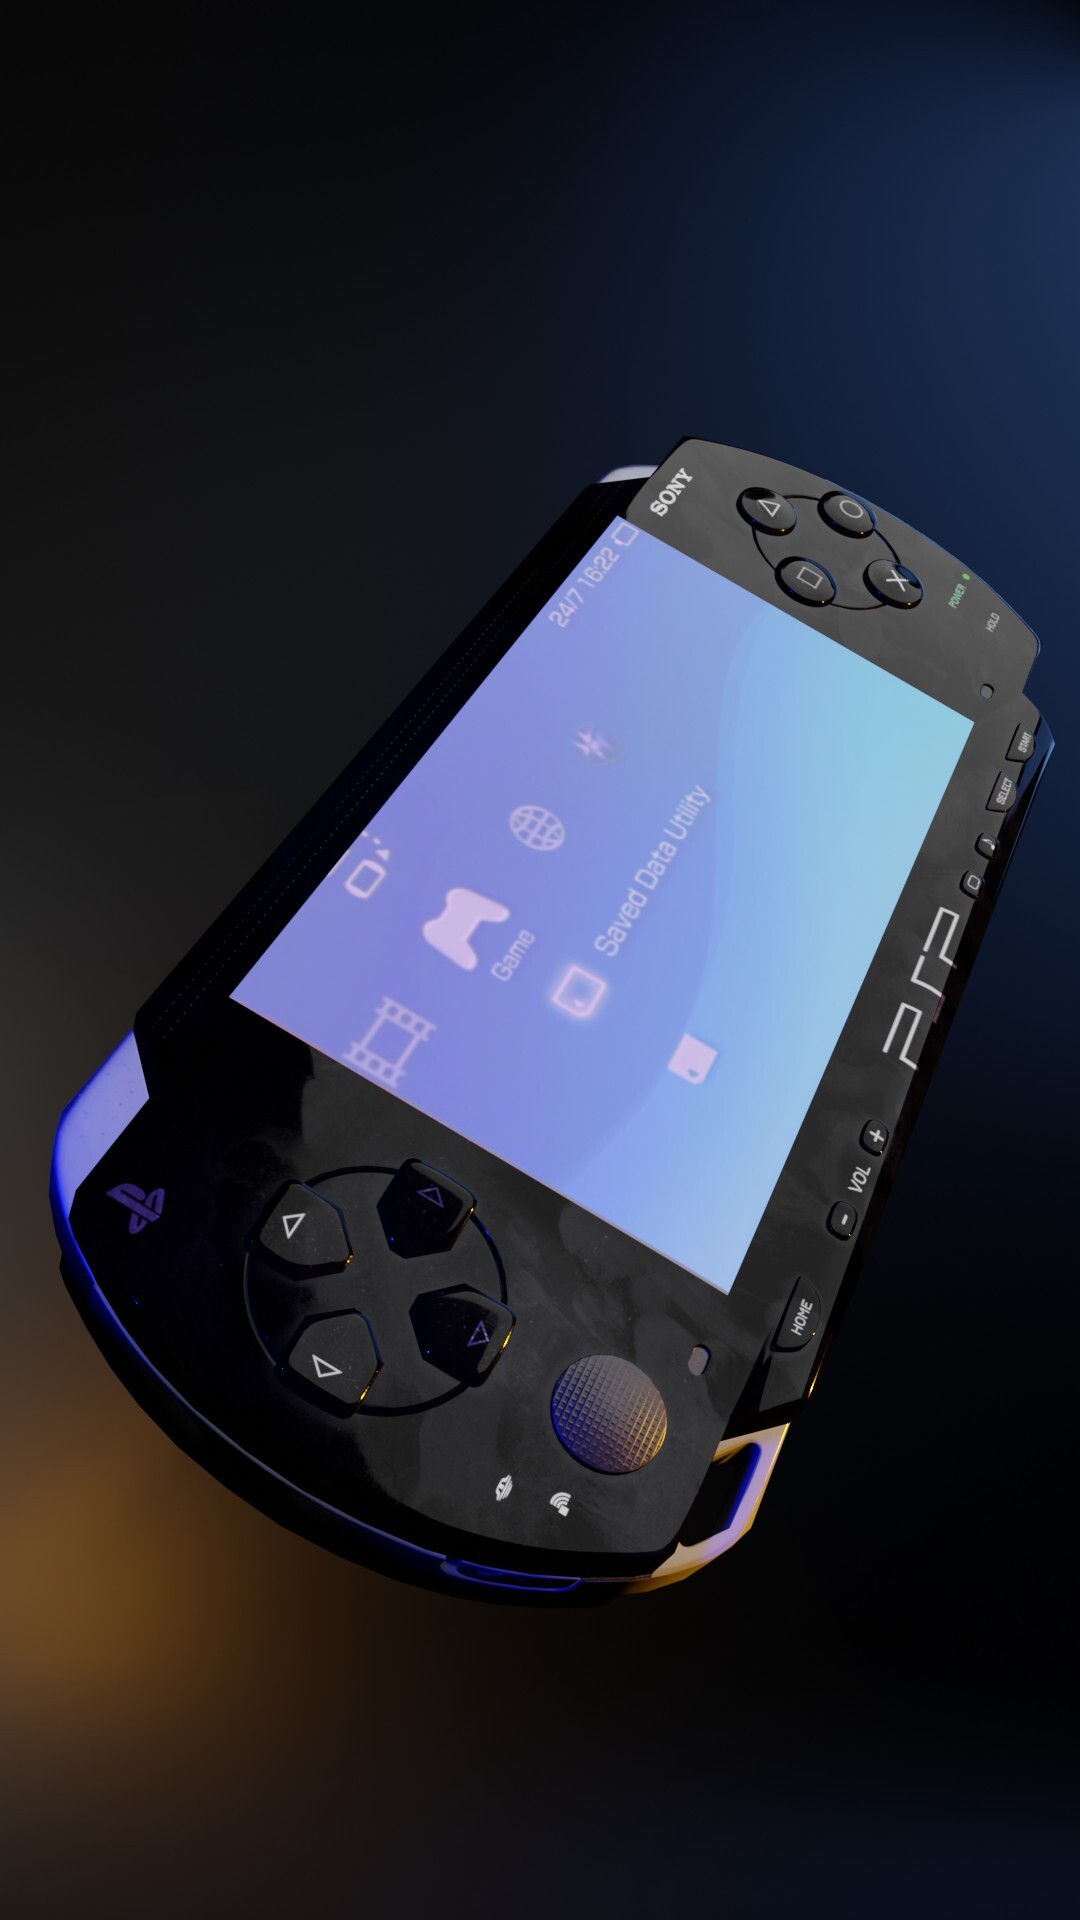 Sony PSP 1000 Playstation Portable Display 